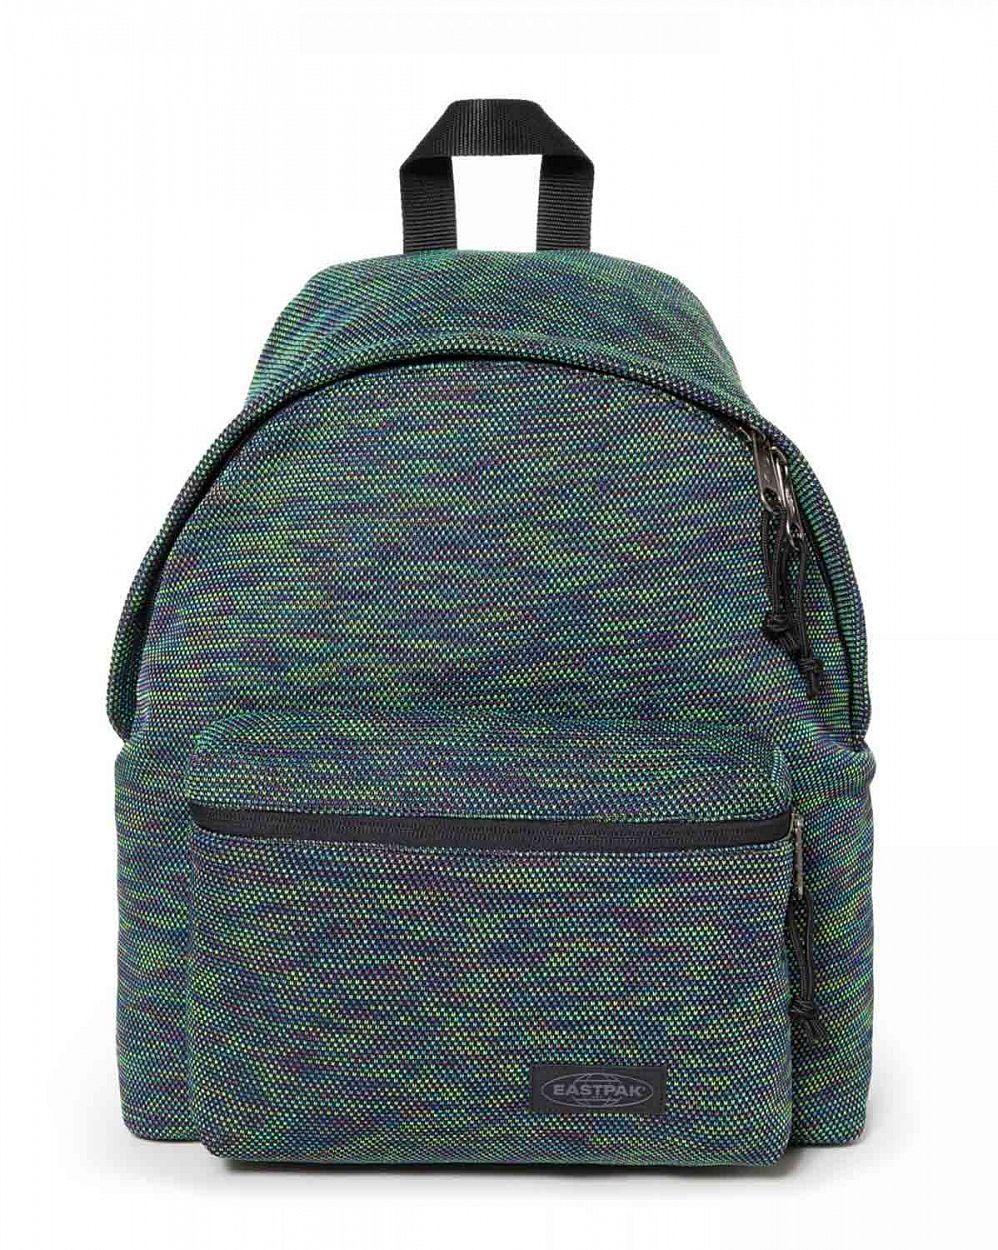 Рюкзак тканевый с отделом для 13 ноутбука Eastpak Padded Pak'R Knitted Green отзывы